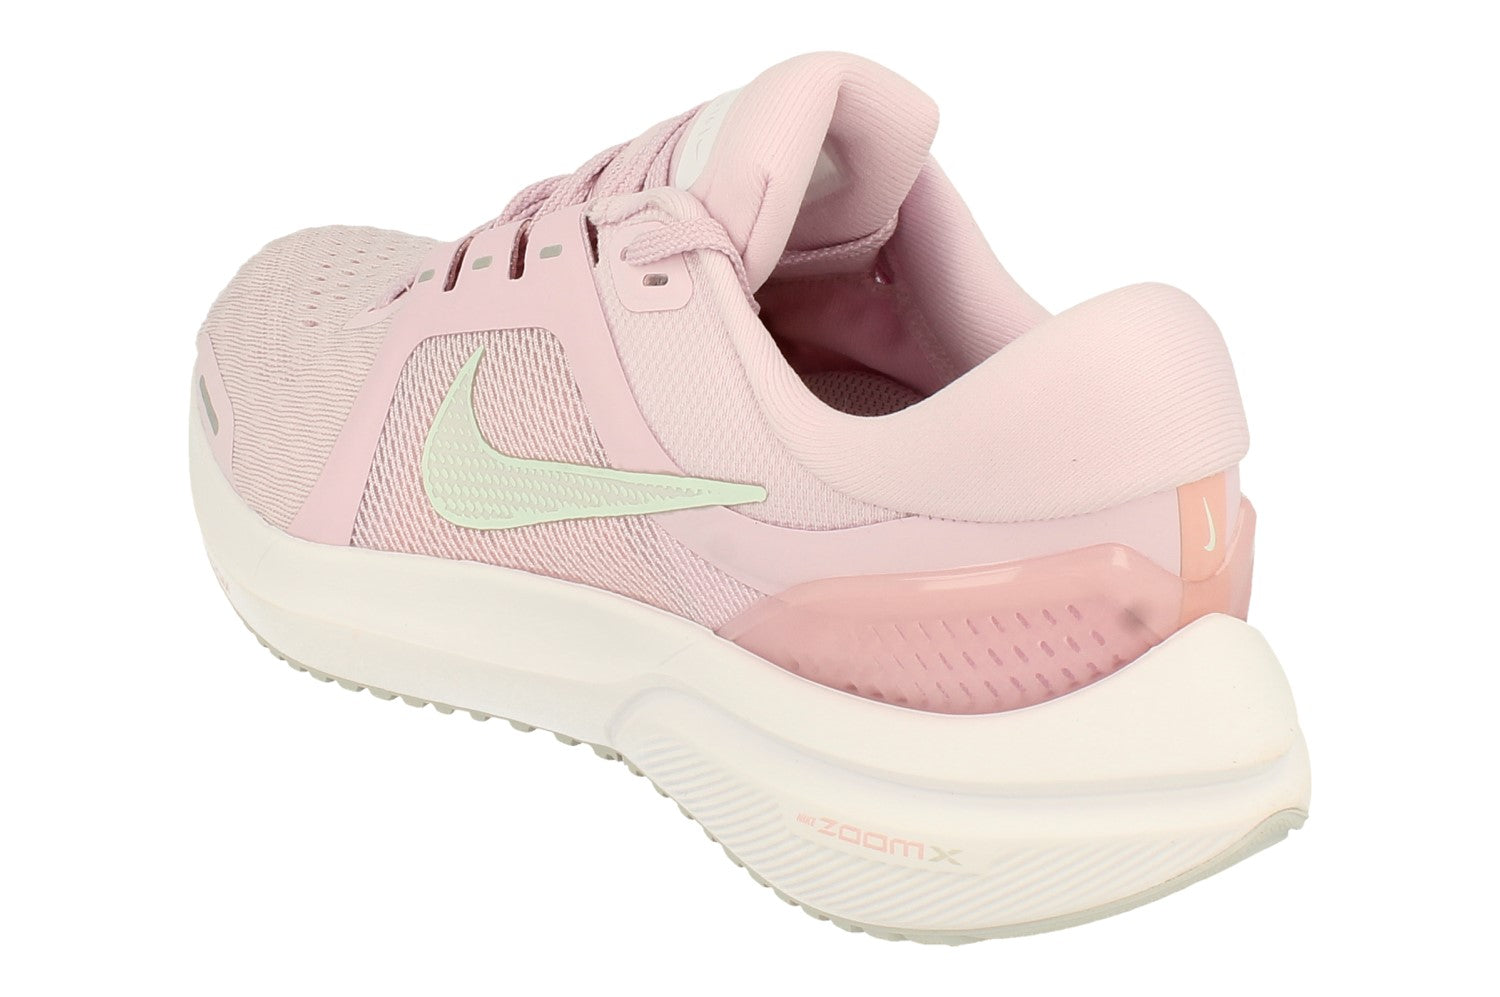 Nike Air Zoom Vomero 16 Regal Pink (Women's)